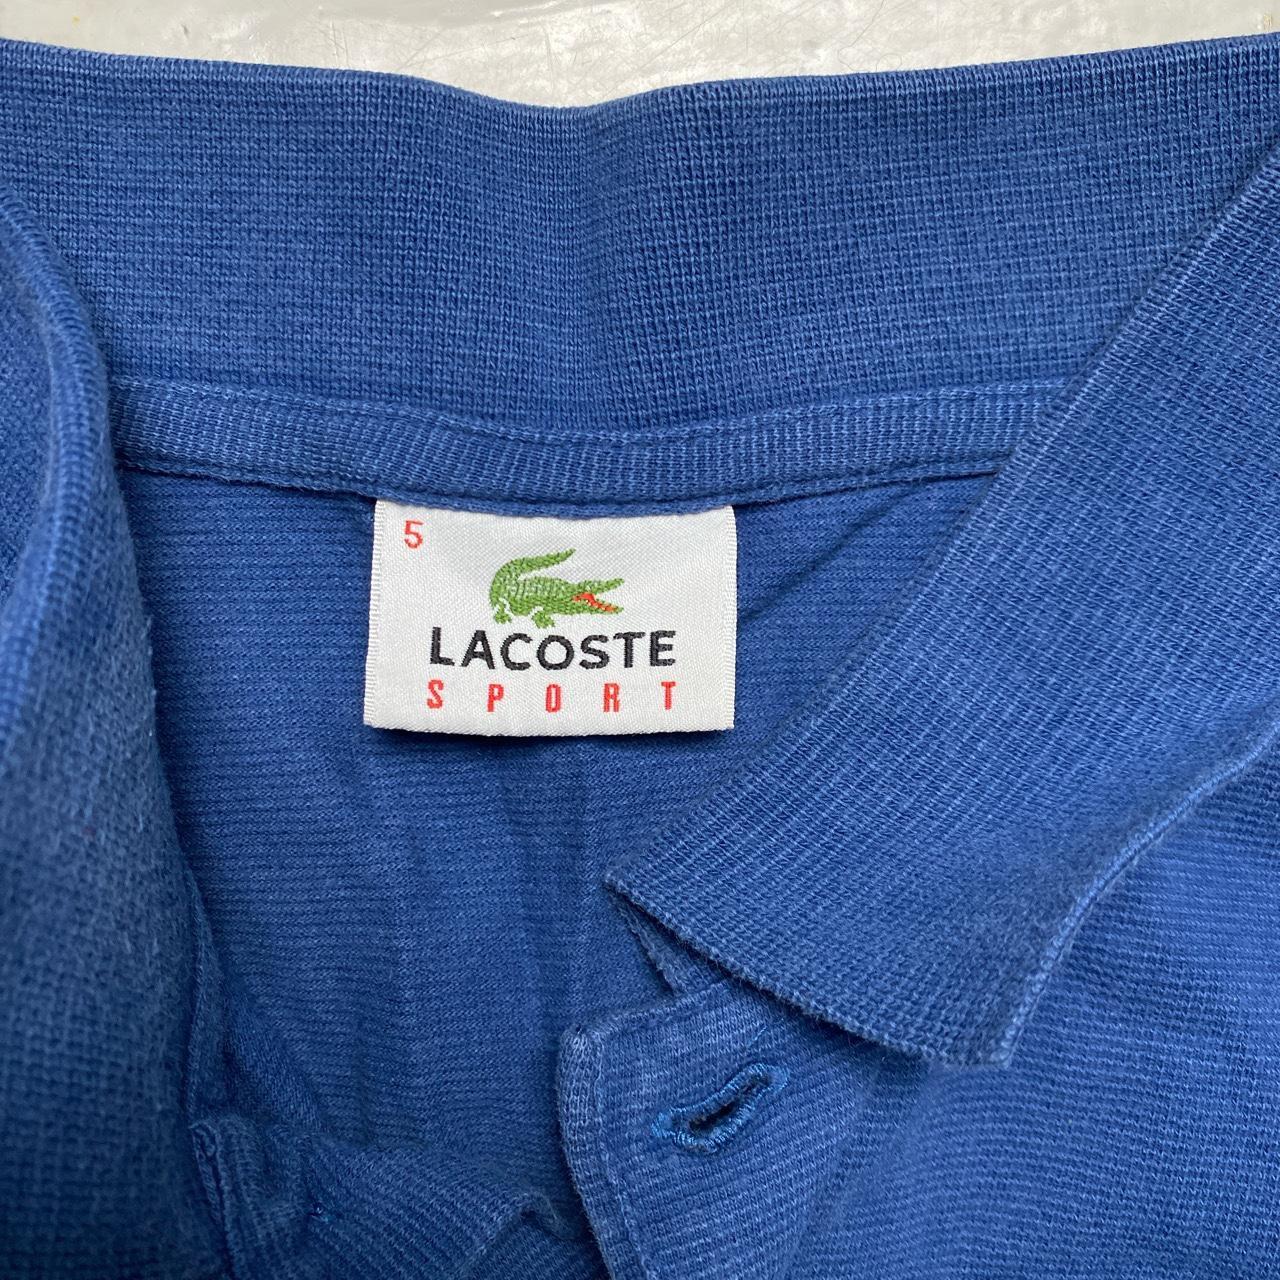 Lacoste Croc Blue Long Sleeve Polo Shirt